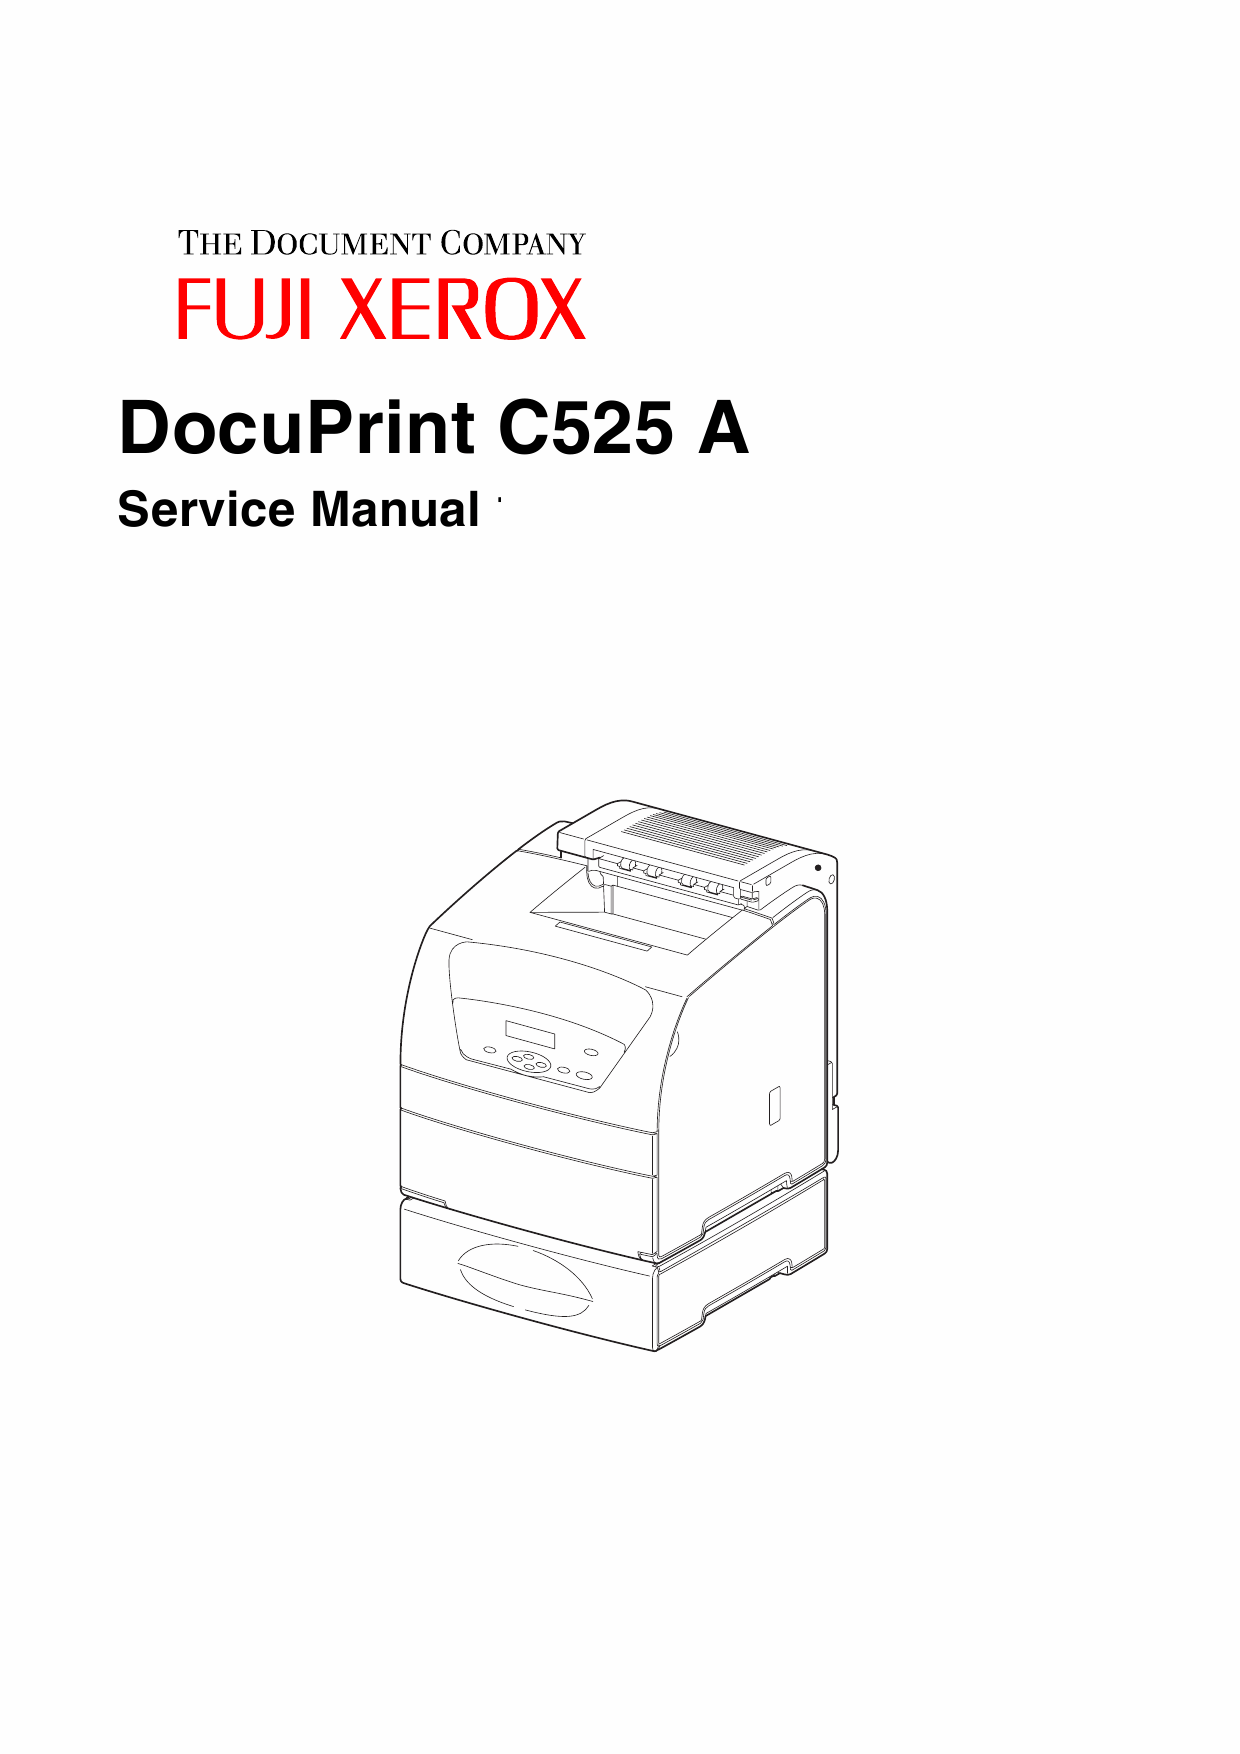 Xerox DocuPrint C525A Fuji Color-Laser-Printer Parts List and Service Manual-1